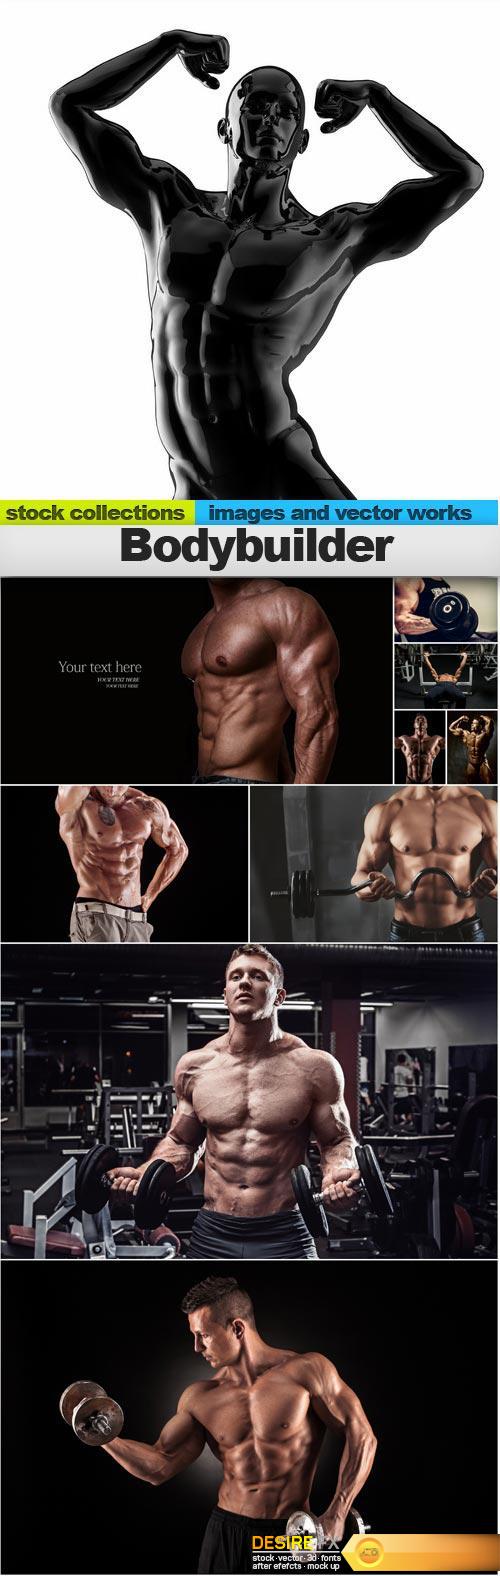 Bodybuilder, 10 x UHQ JPEG